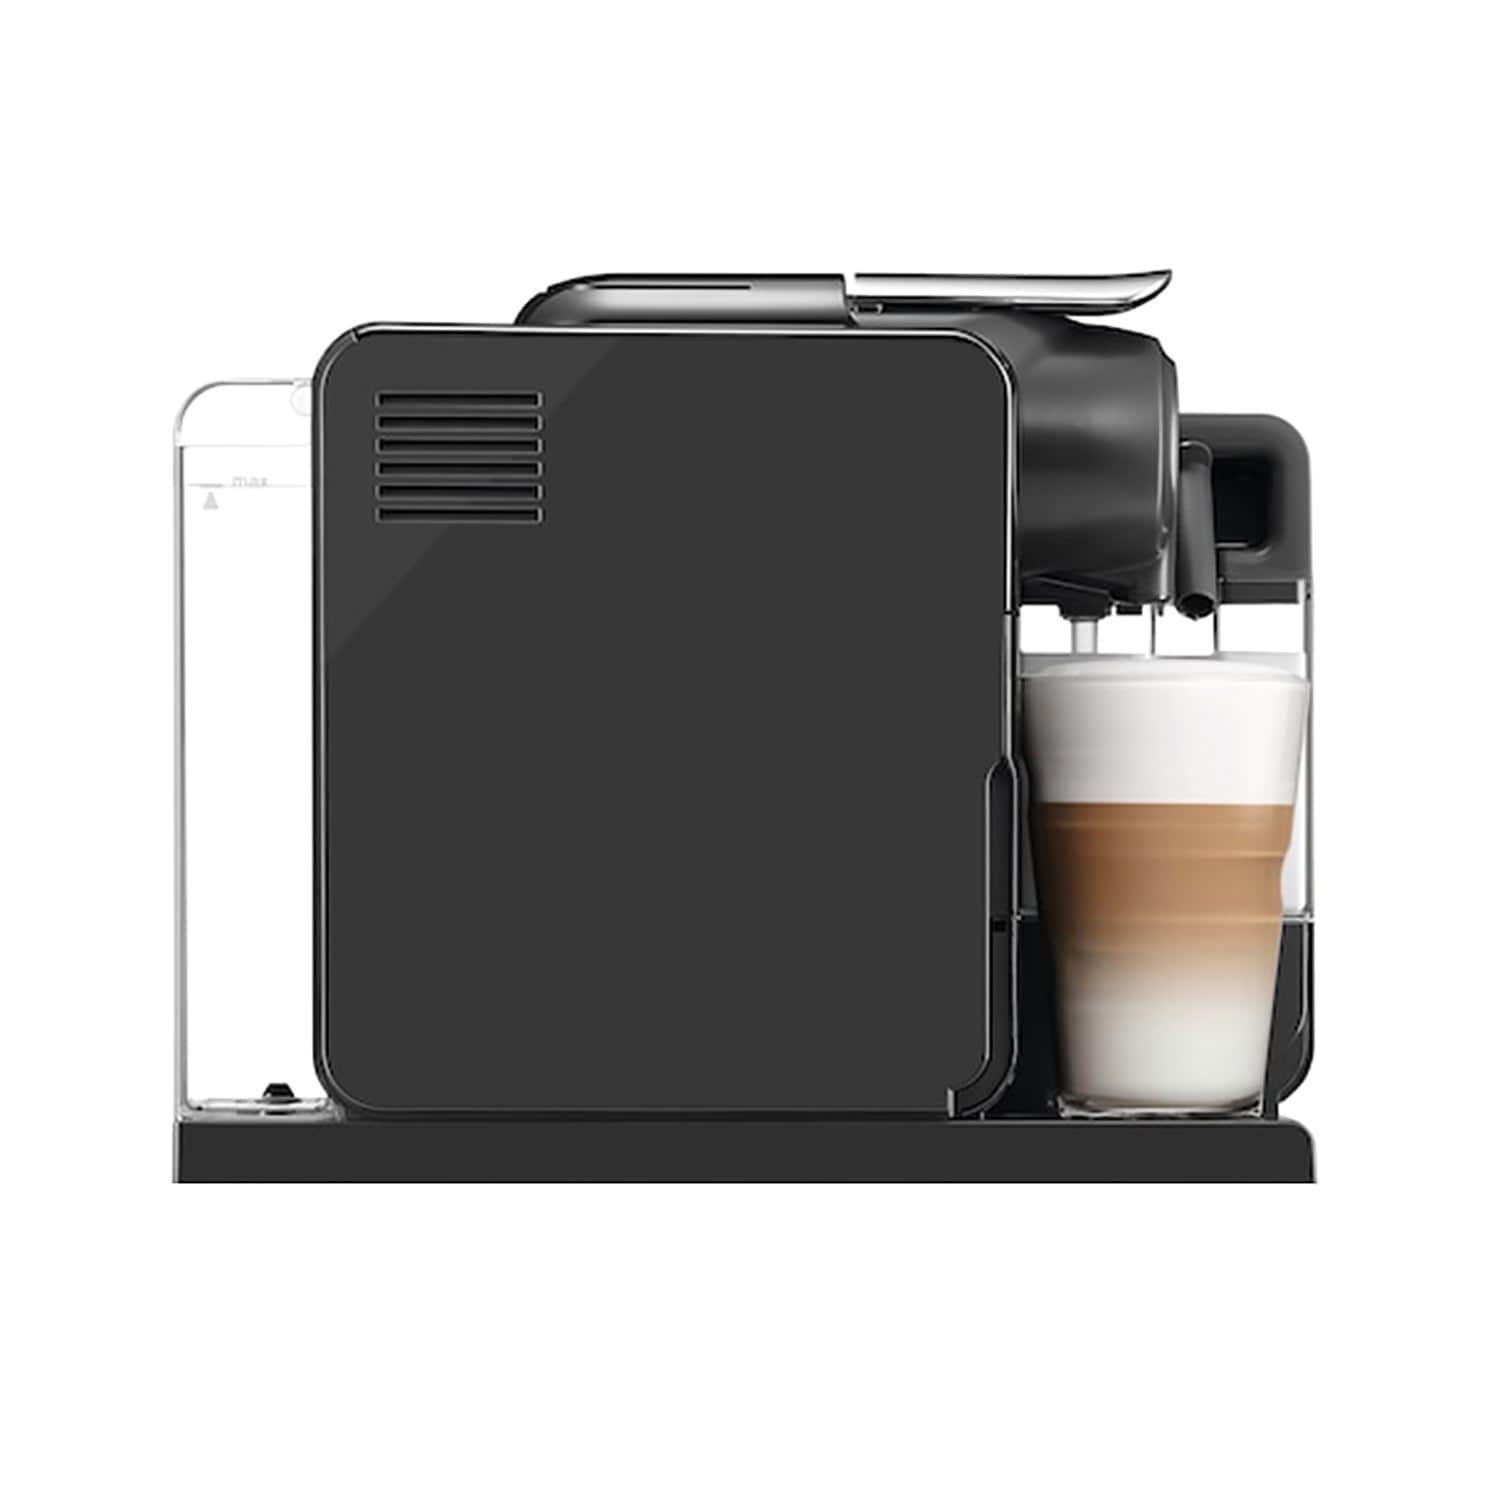 Nespresso ماكينة تحضير القهوة - أسود - F521-ME-BK-NE - جاشنمال هوم